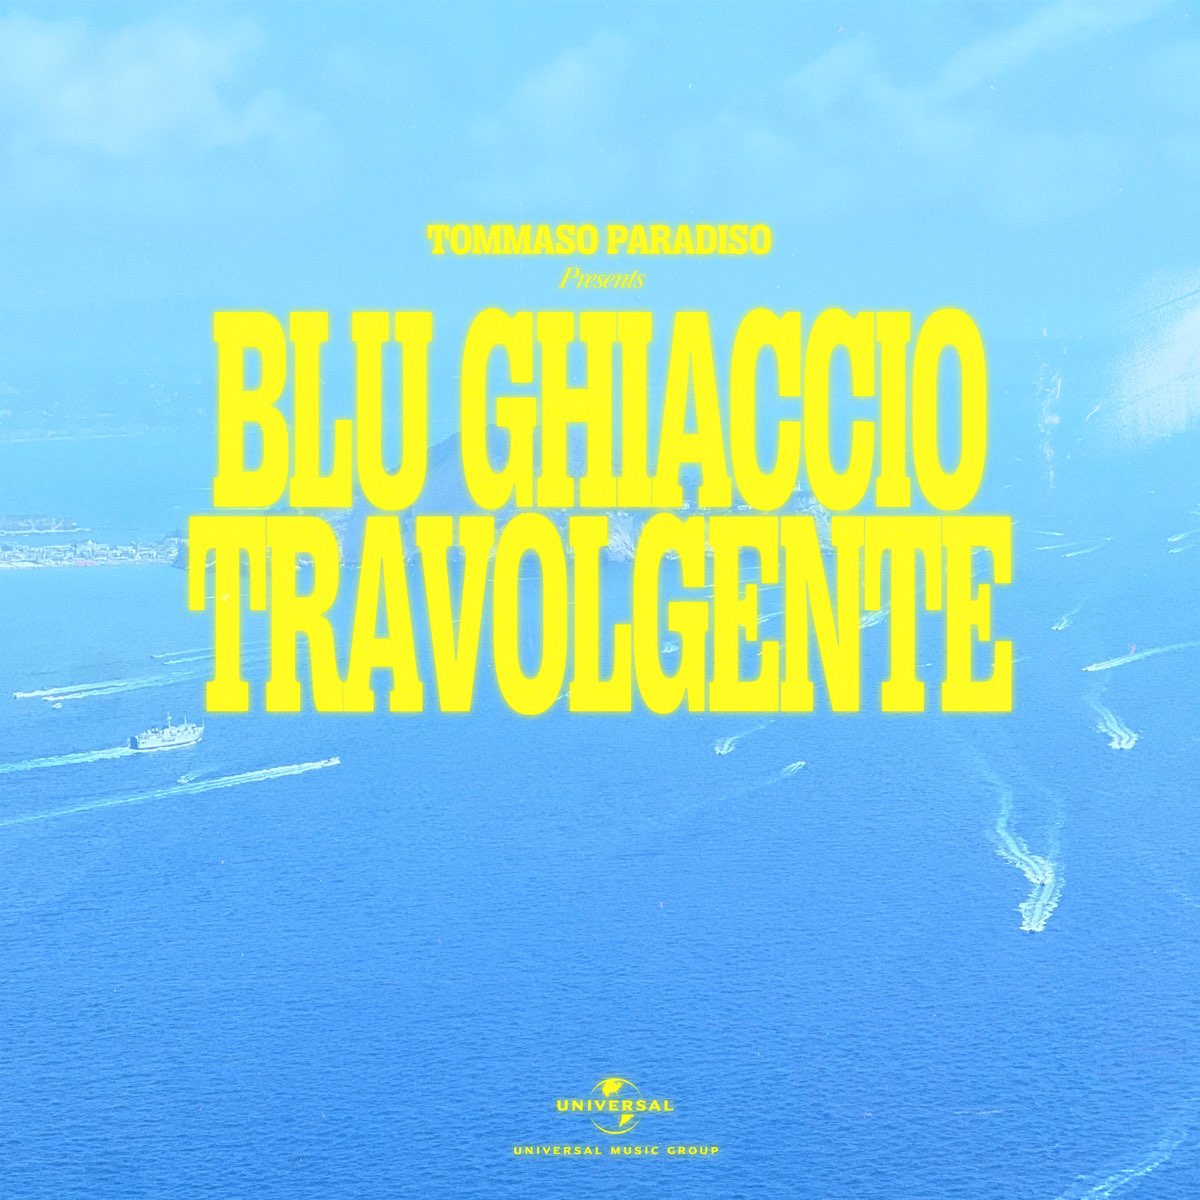 Blu Ghiaccio Travolgente - Single - Album by Tommaso Paradiso - Apple Music